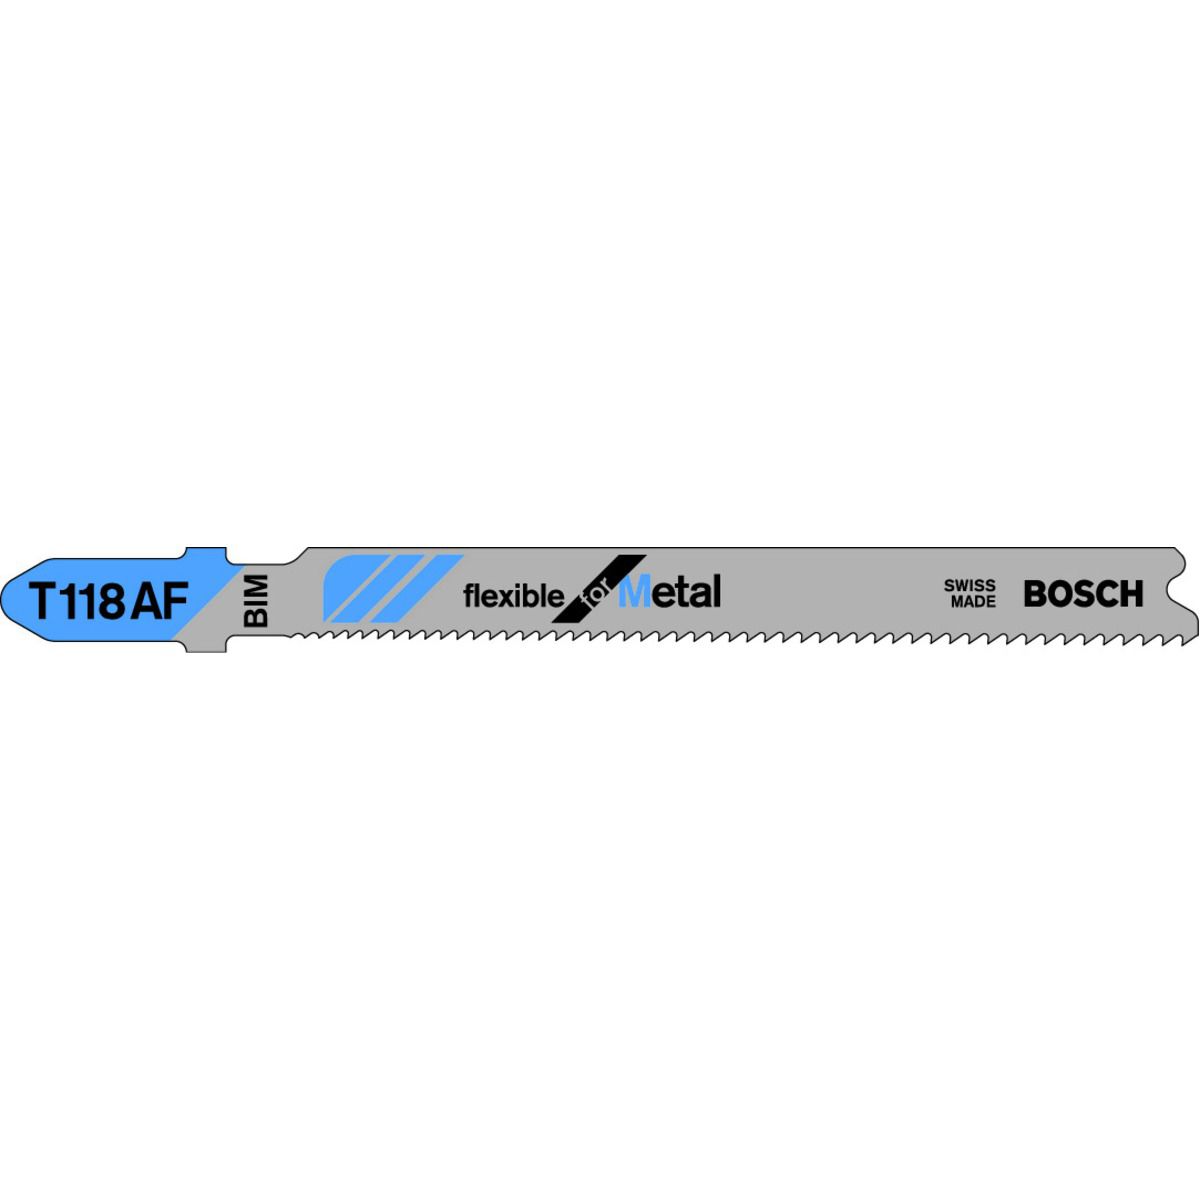 Image of Bosch T118AF Metal Jigsaw Blades - Pack of 5